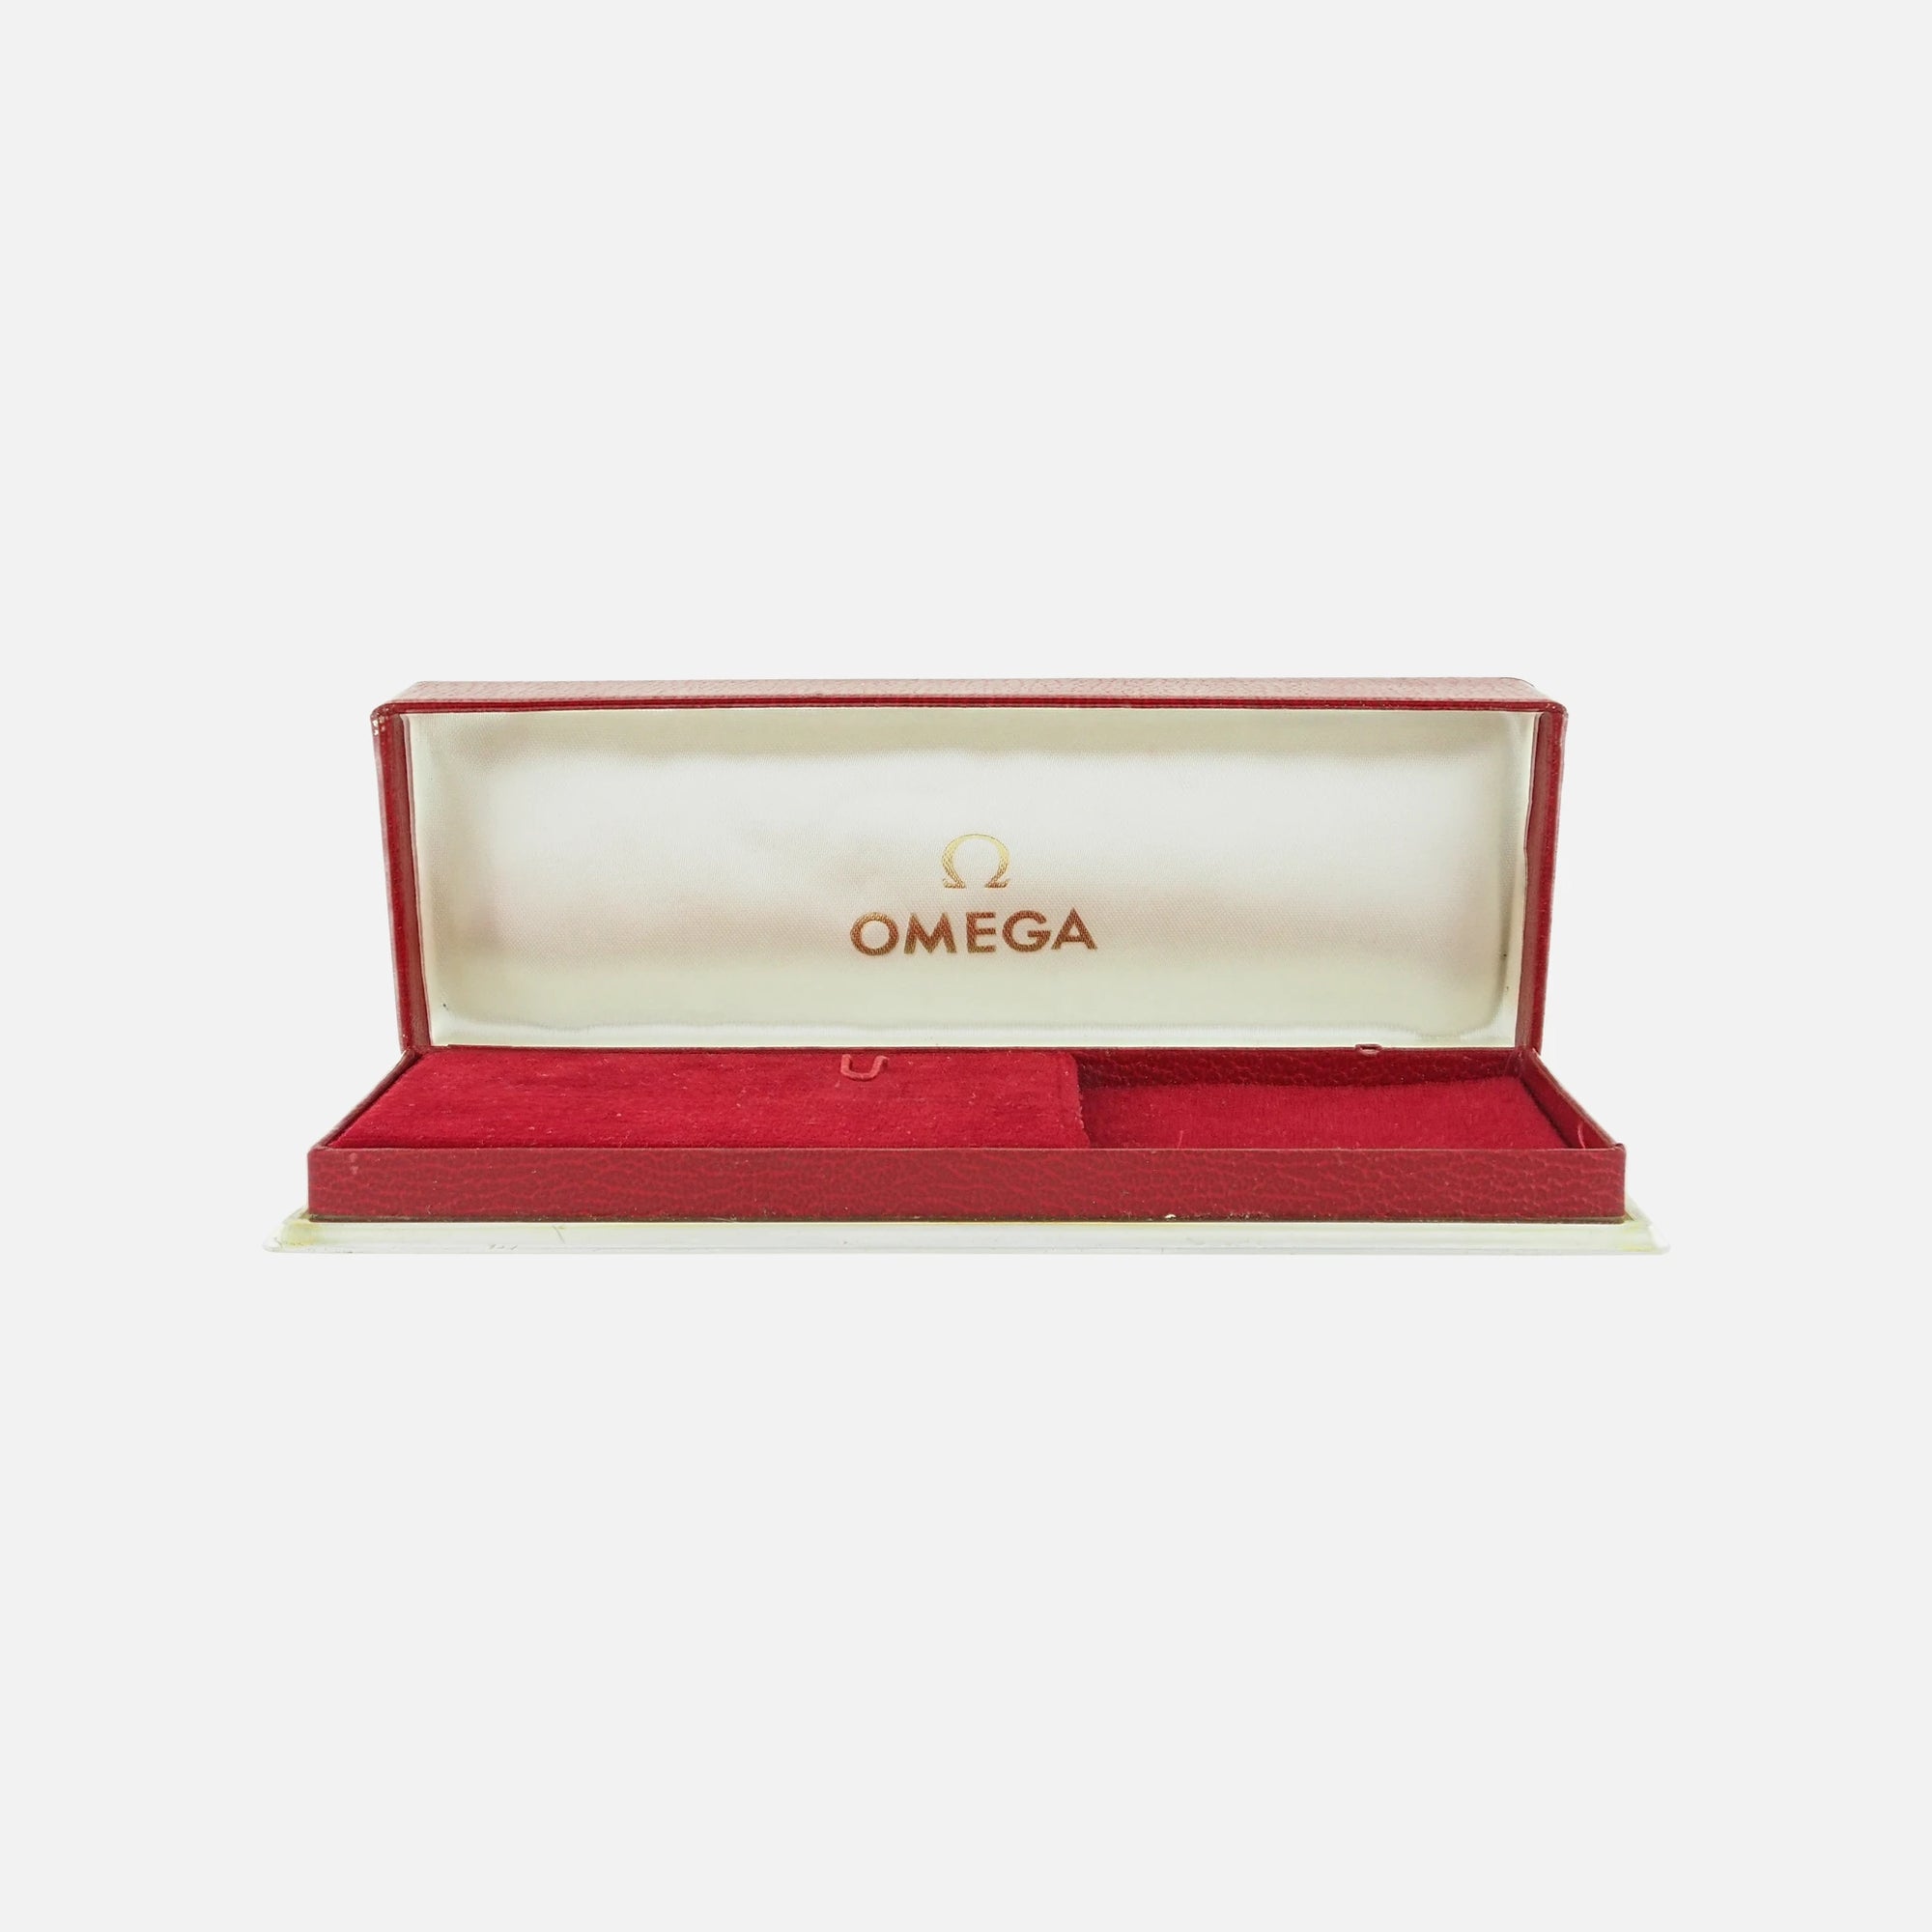 1950s - 1960s Omega Vintage Watch Box for sale on Vintage Watch Leader